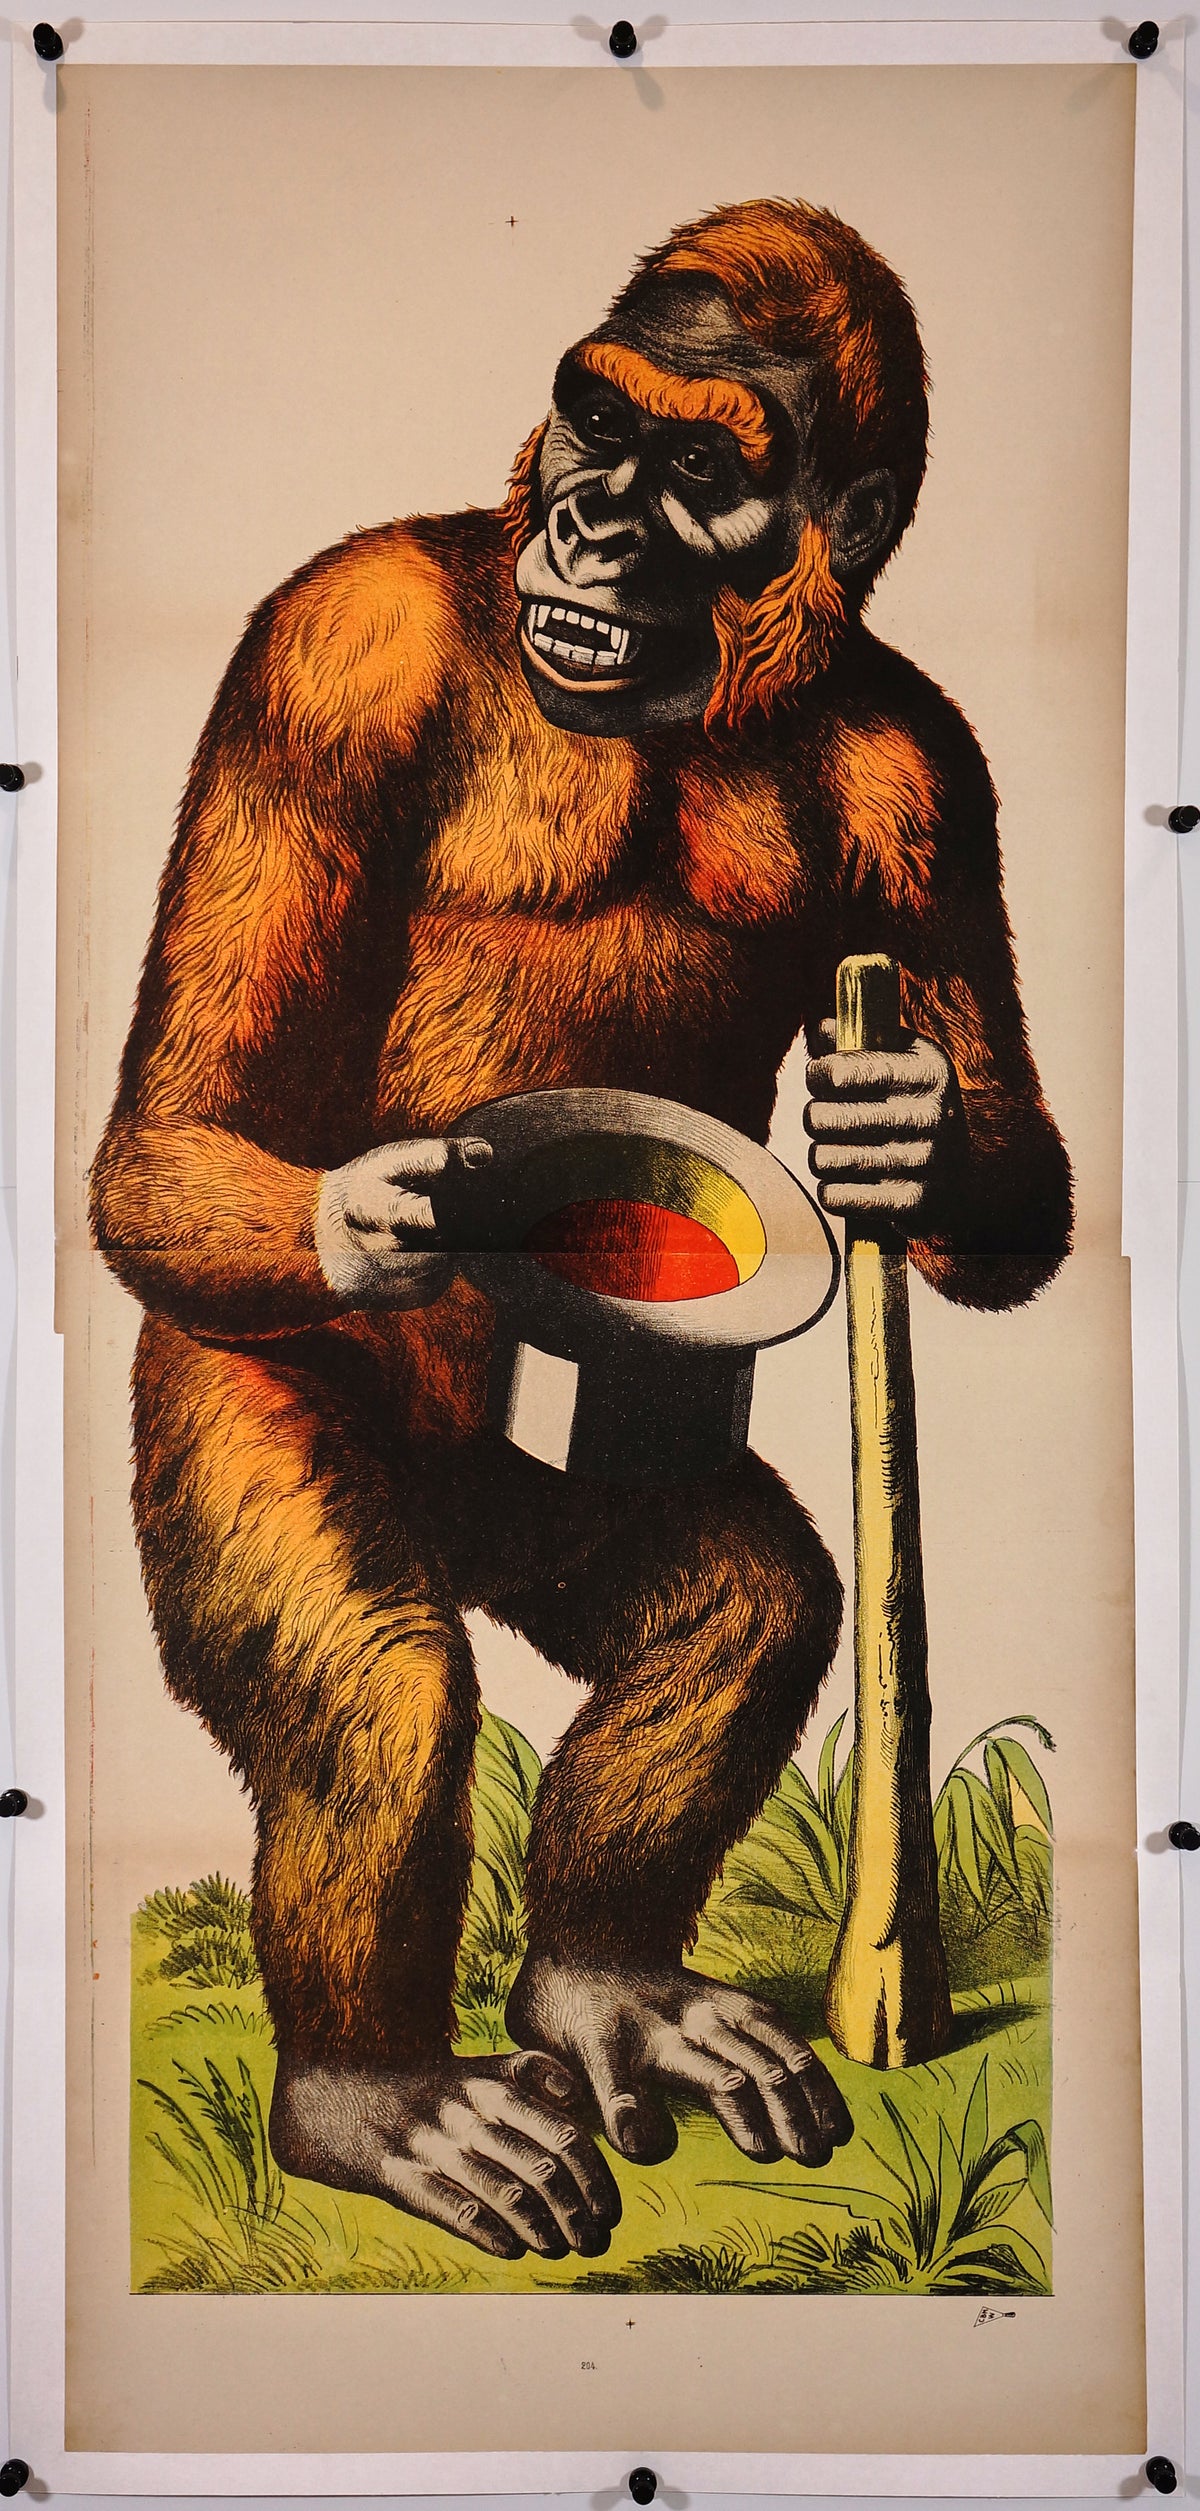 Wissembourg, Gorilla - Authentic Vintage Poster